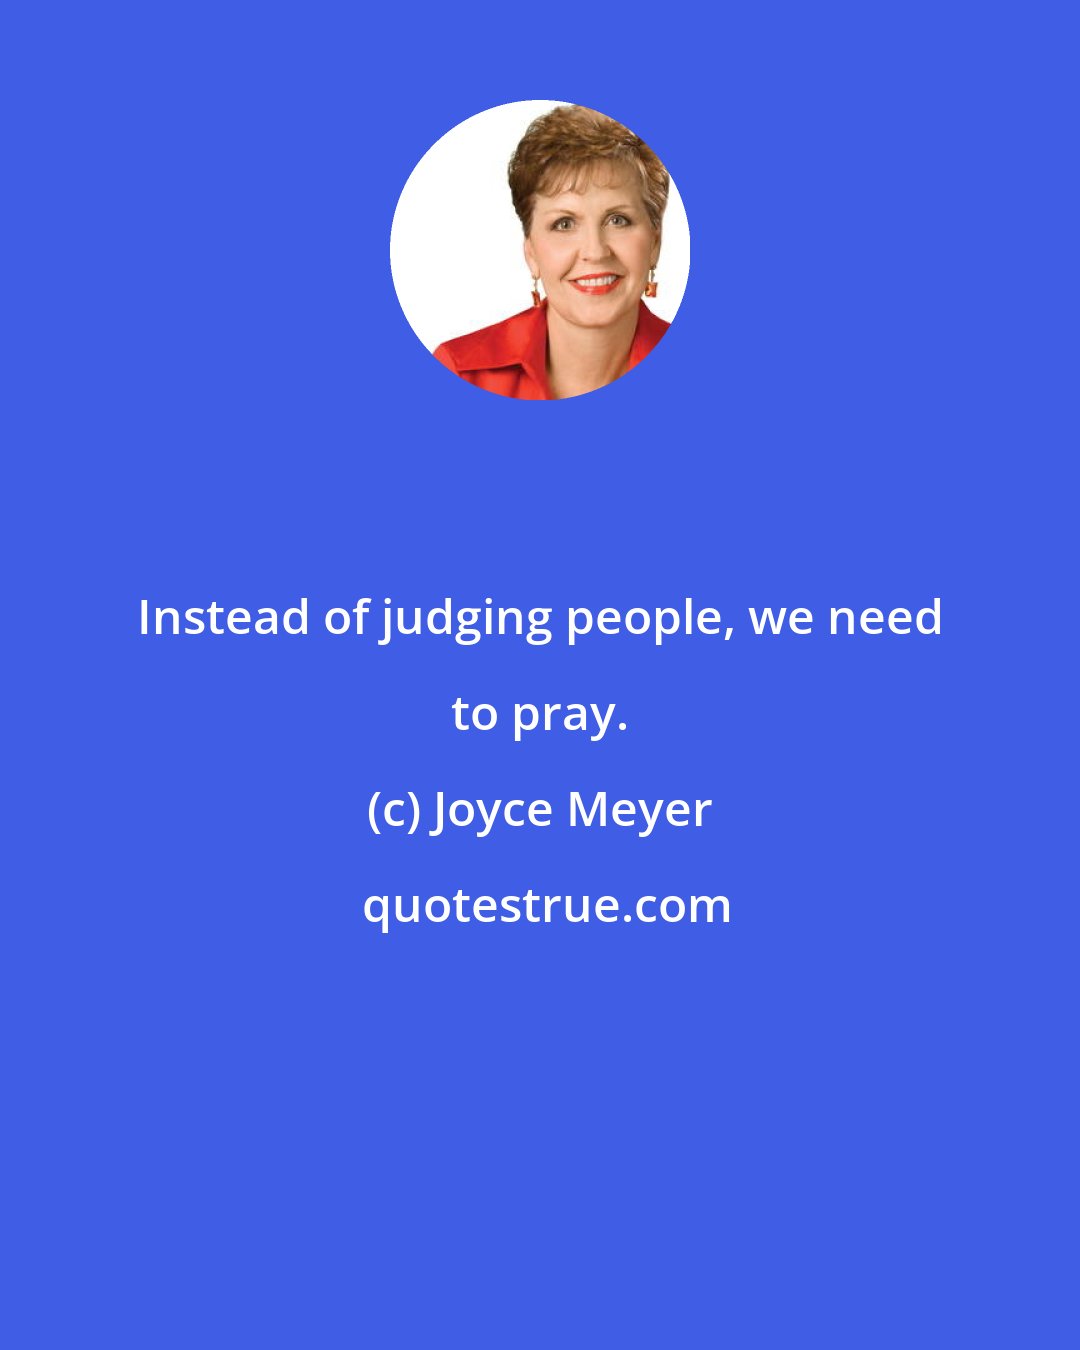 Joyce Meyer: Instead of judging people, we need to pray.